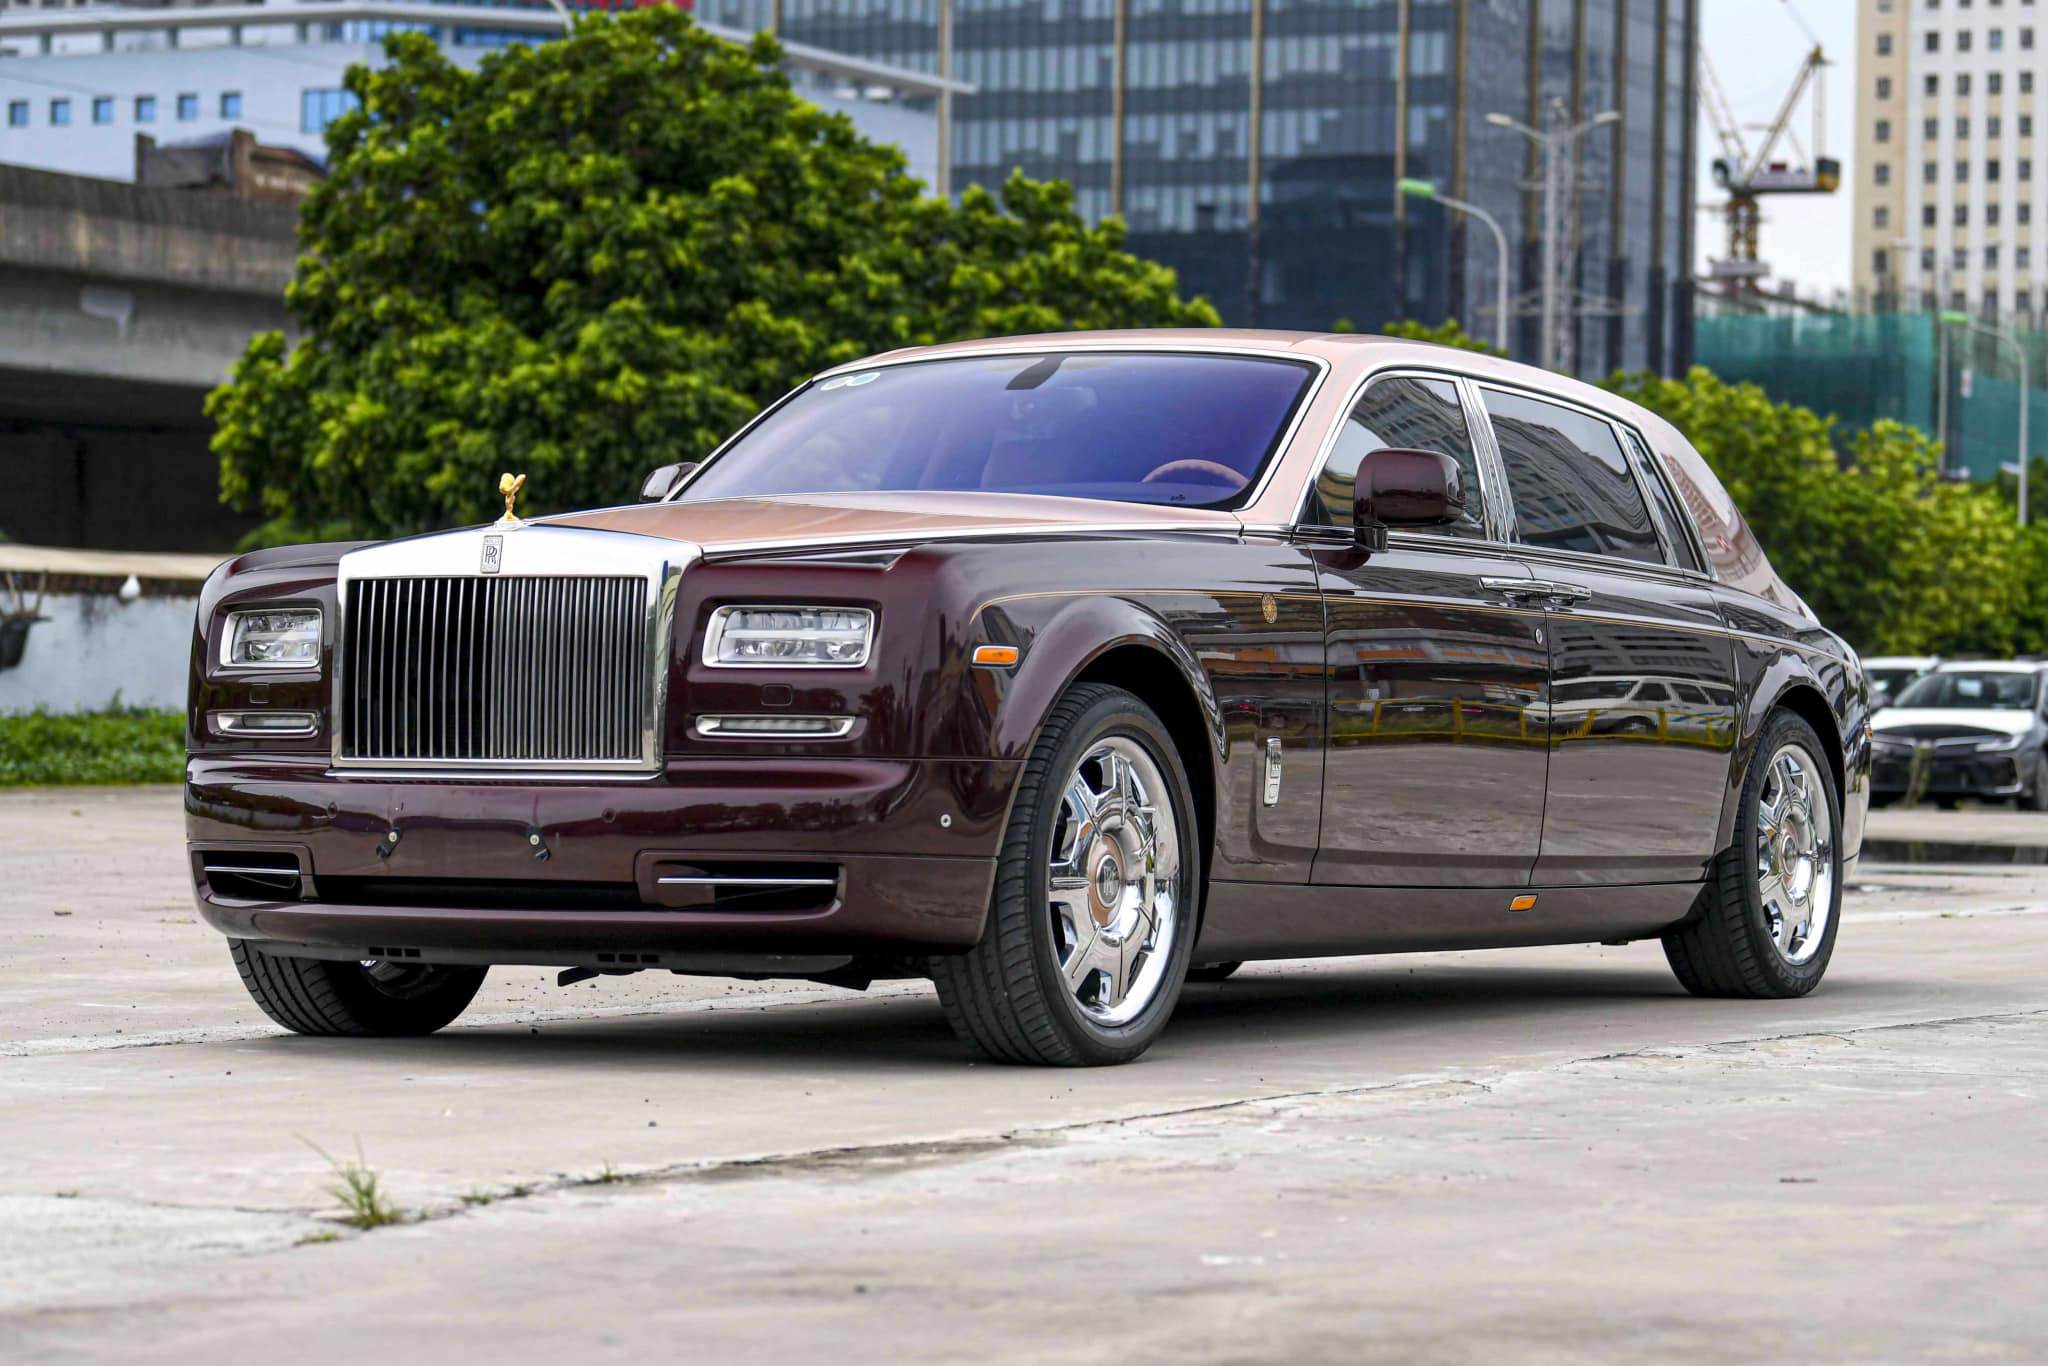 Mua bán RollsRoyce Phantom 2015 giá 32 tỉ  22330617